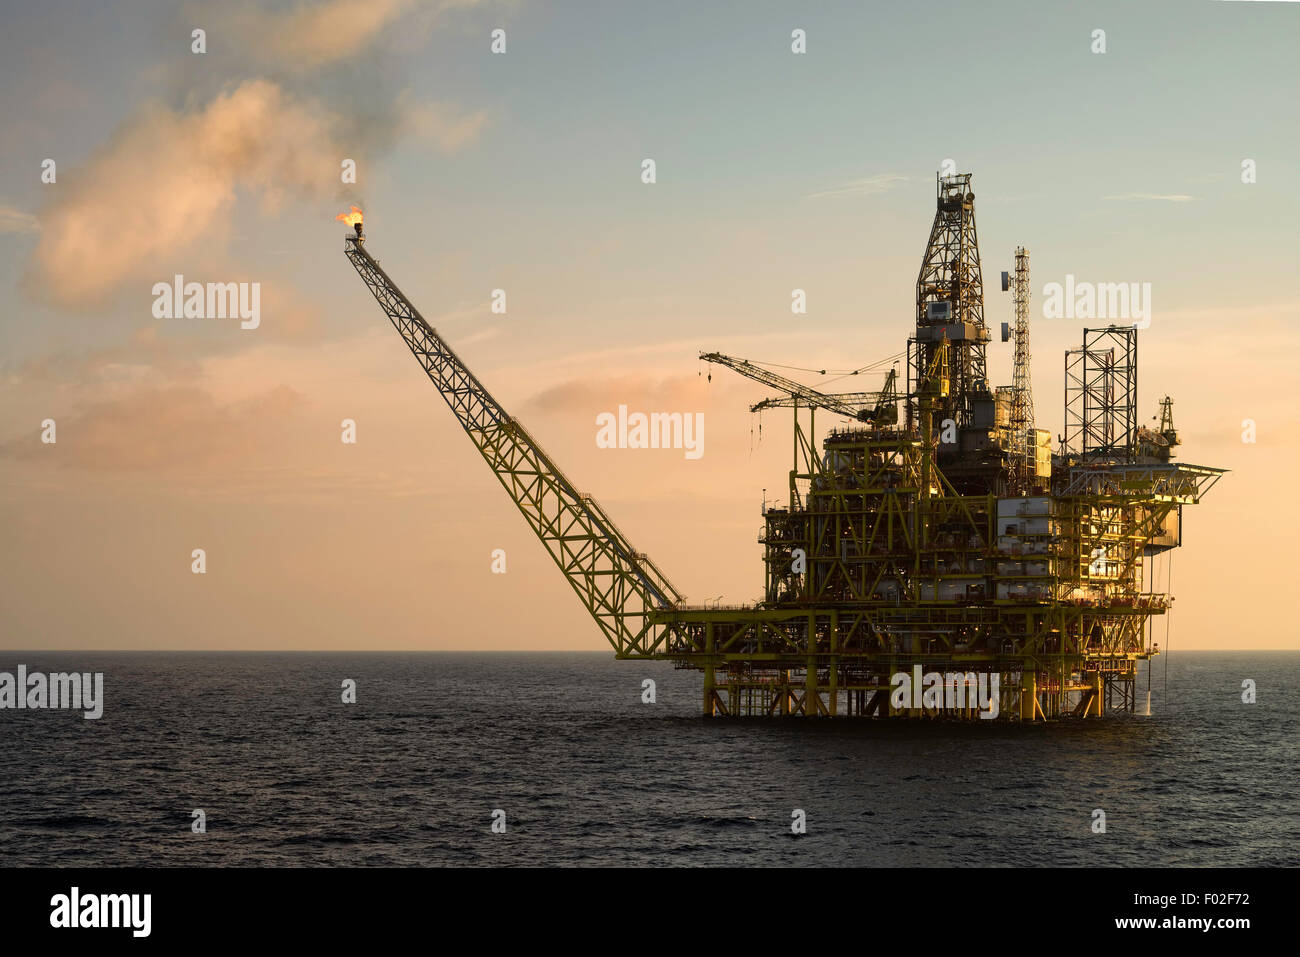 Close-up of an oil platform at sea Stock Photo